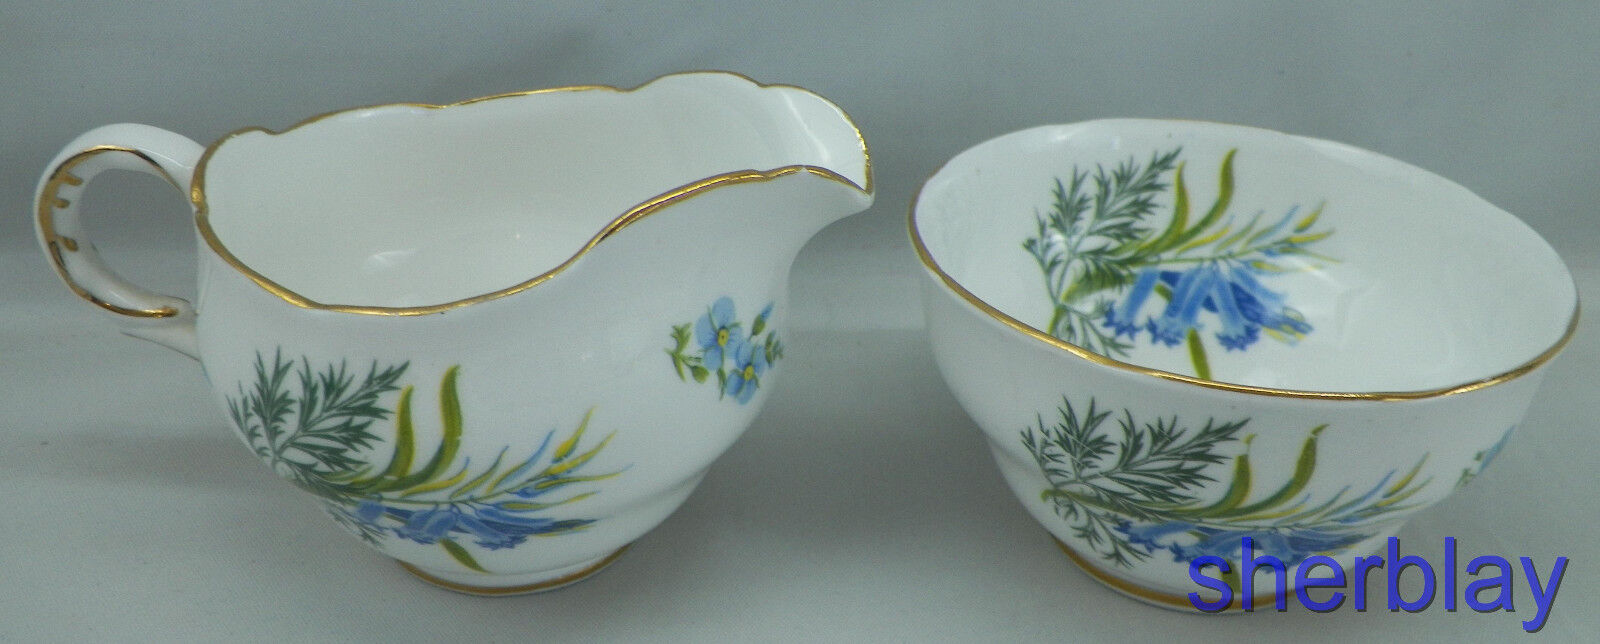 England Melba Fine Bone China White Creamer and Sugar bowl with Blue Flowers